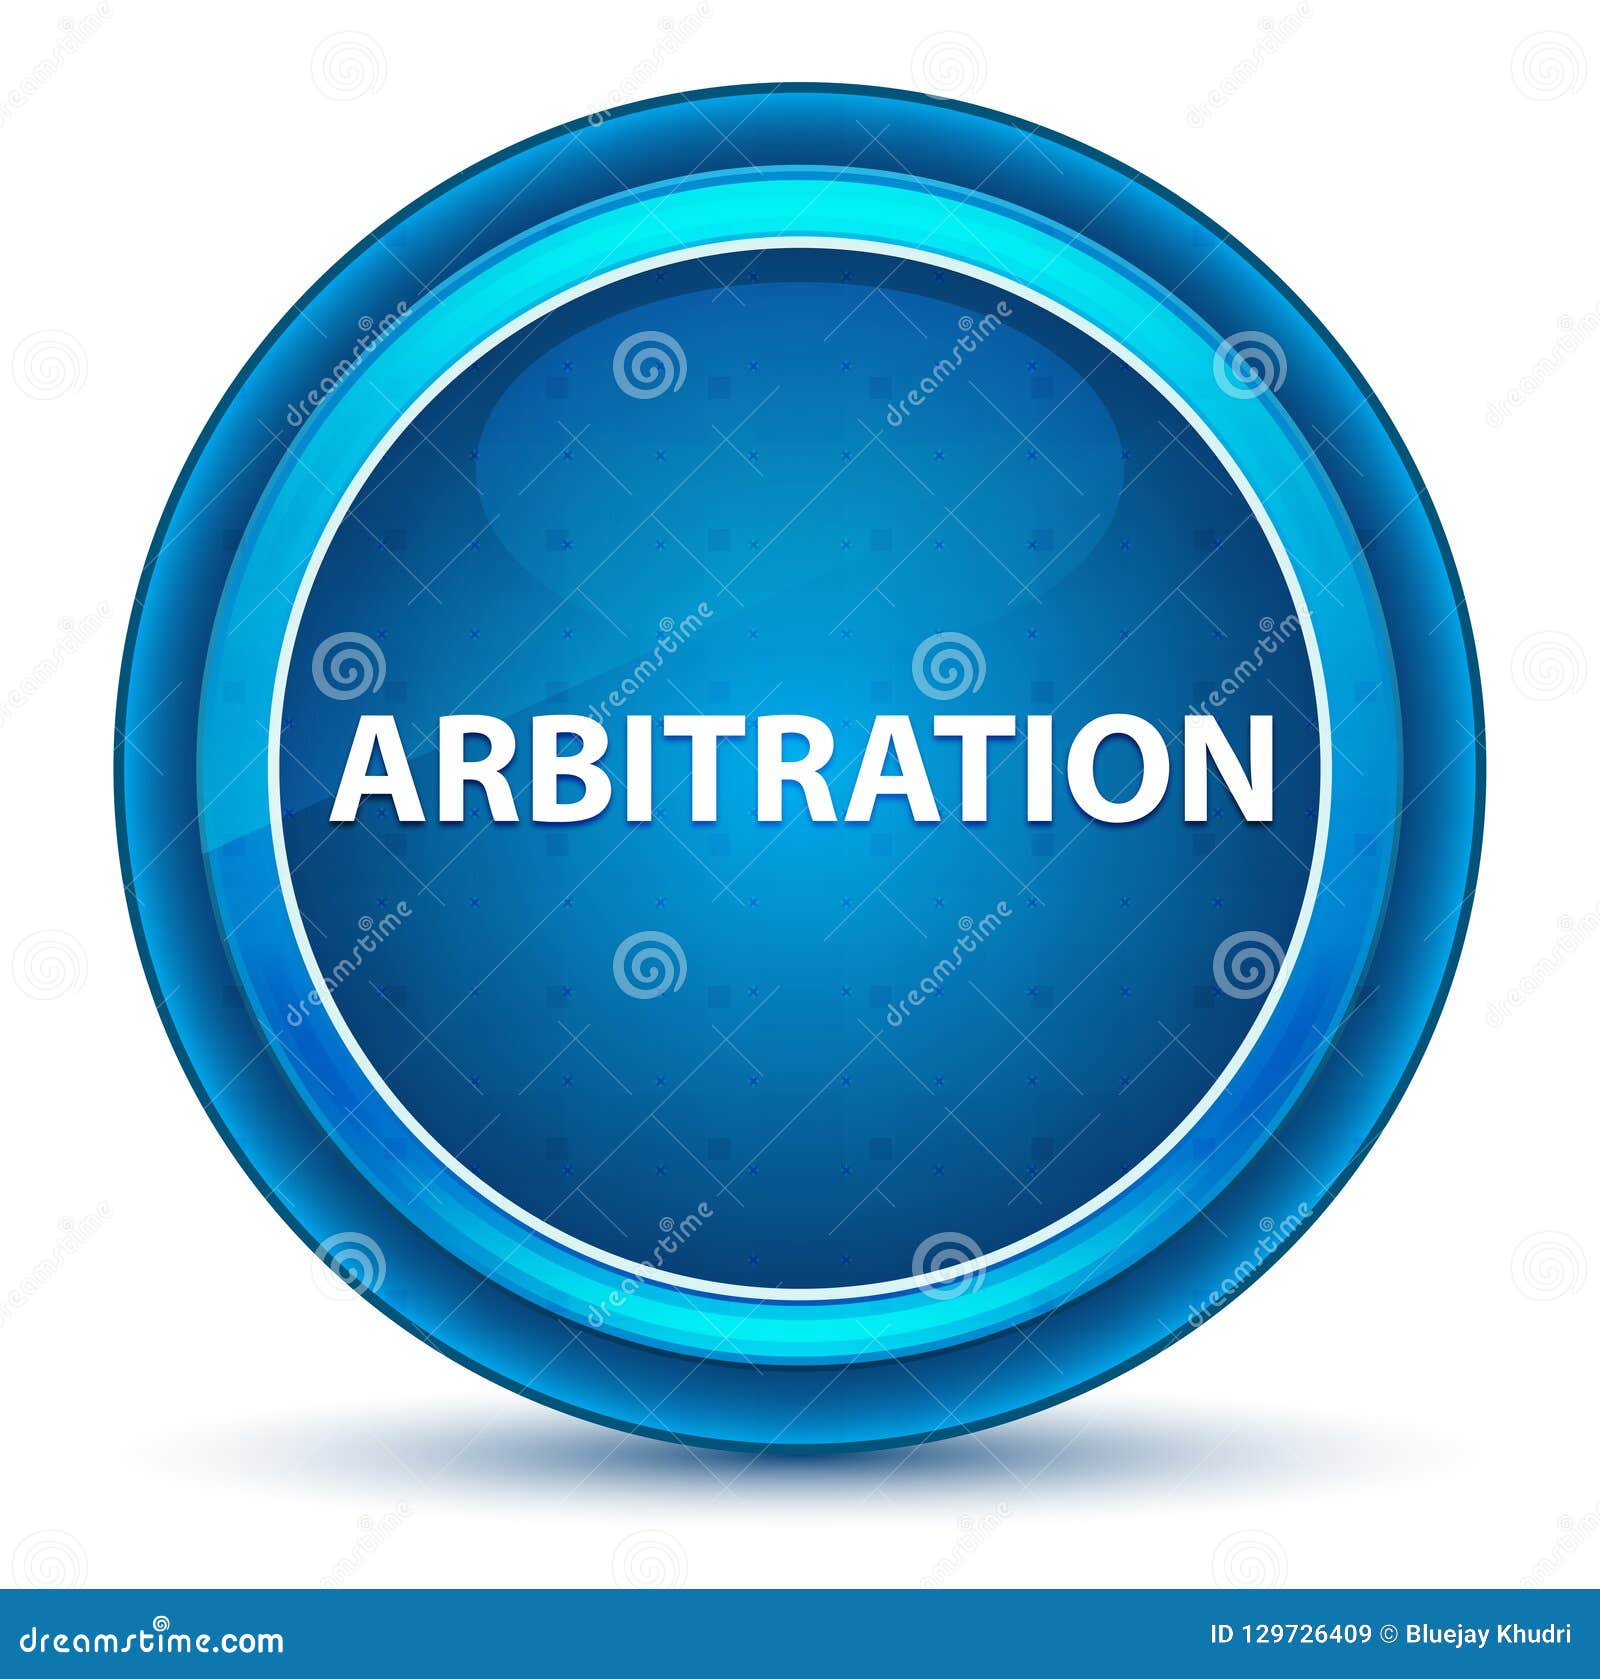 arbitration eyeball blue round button